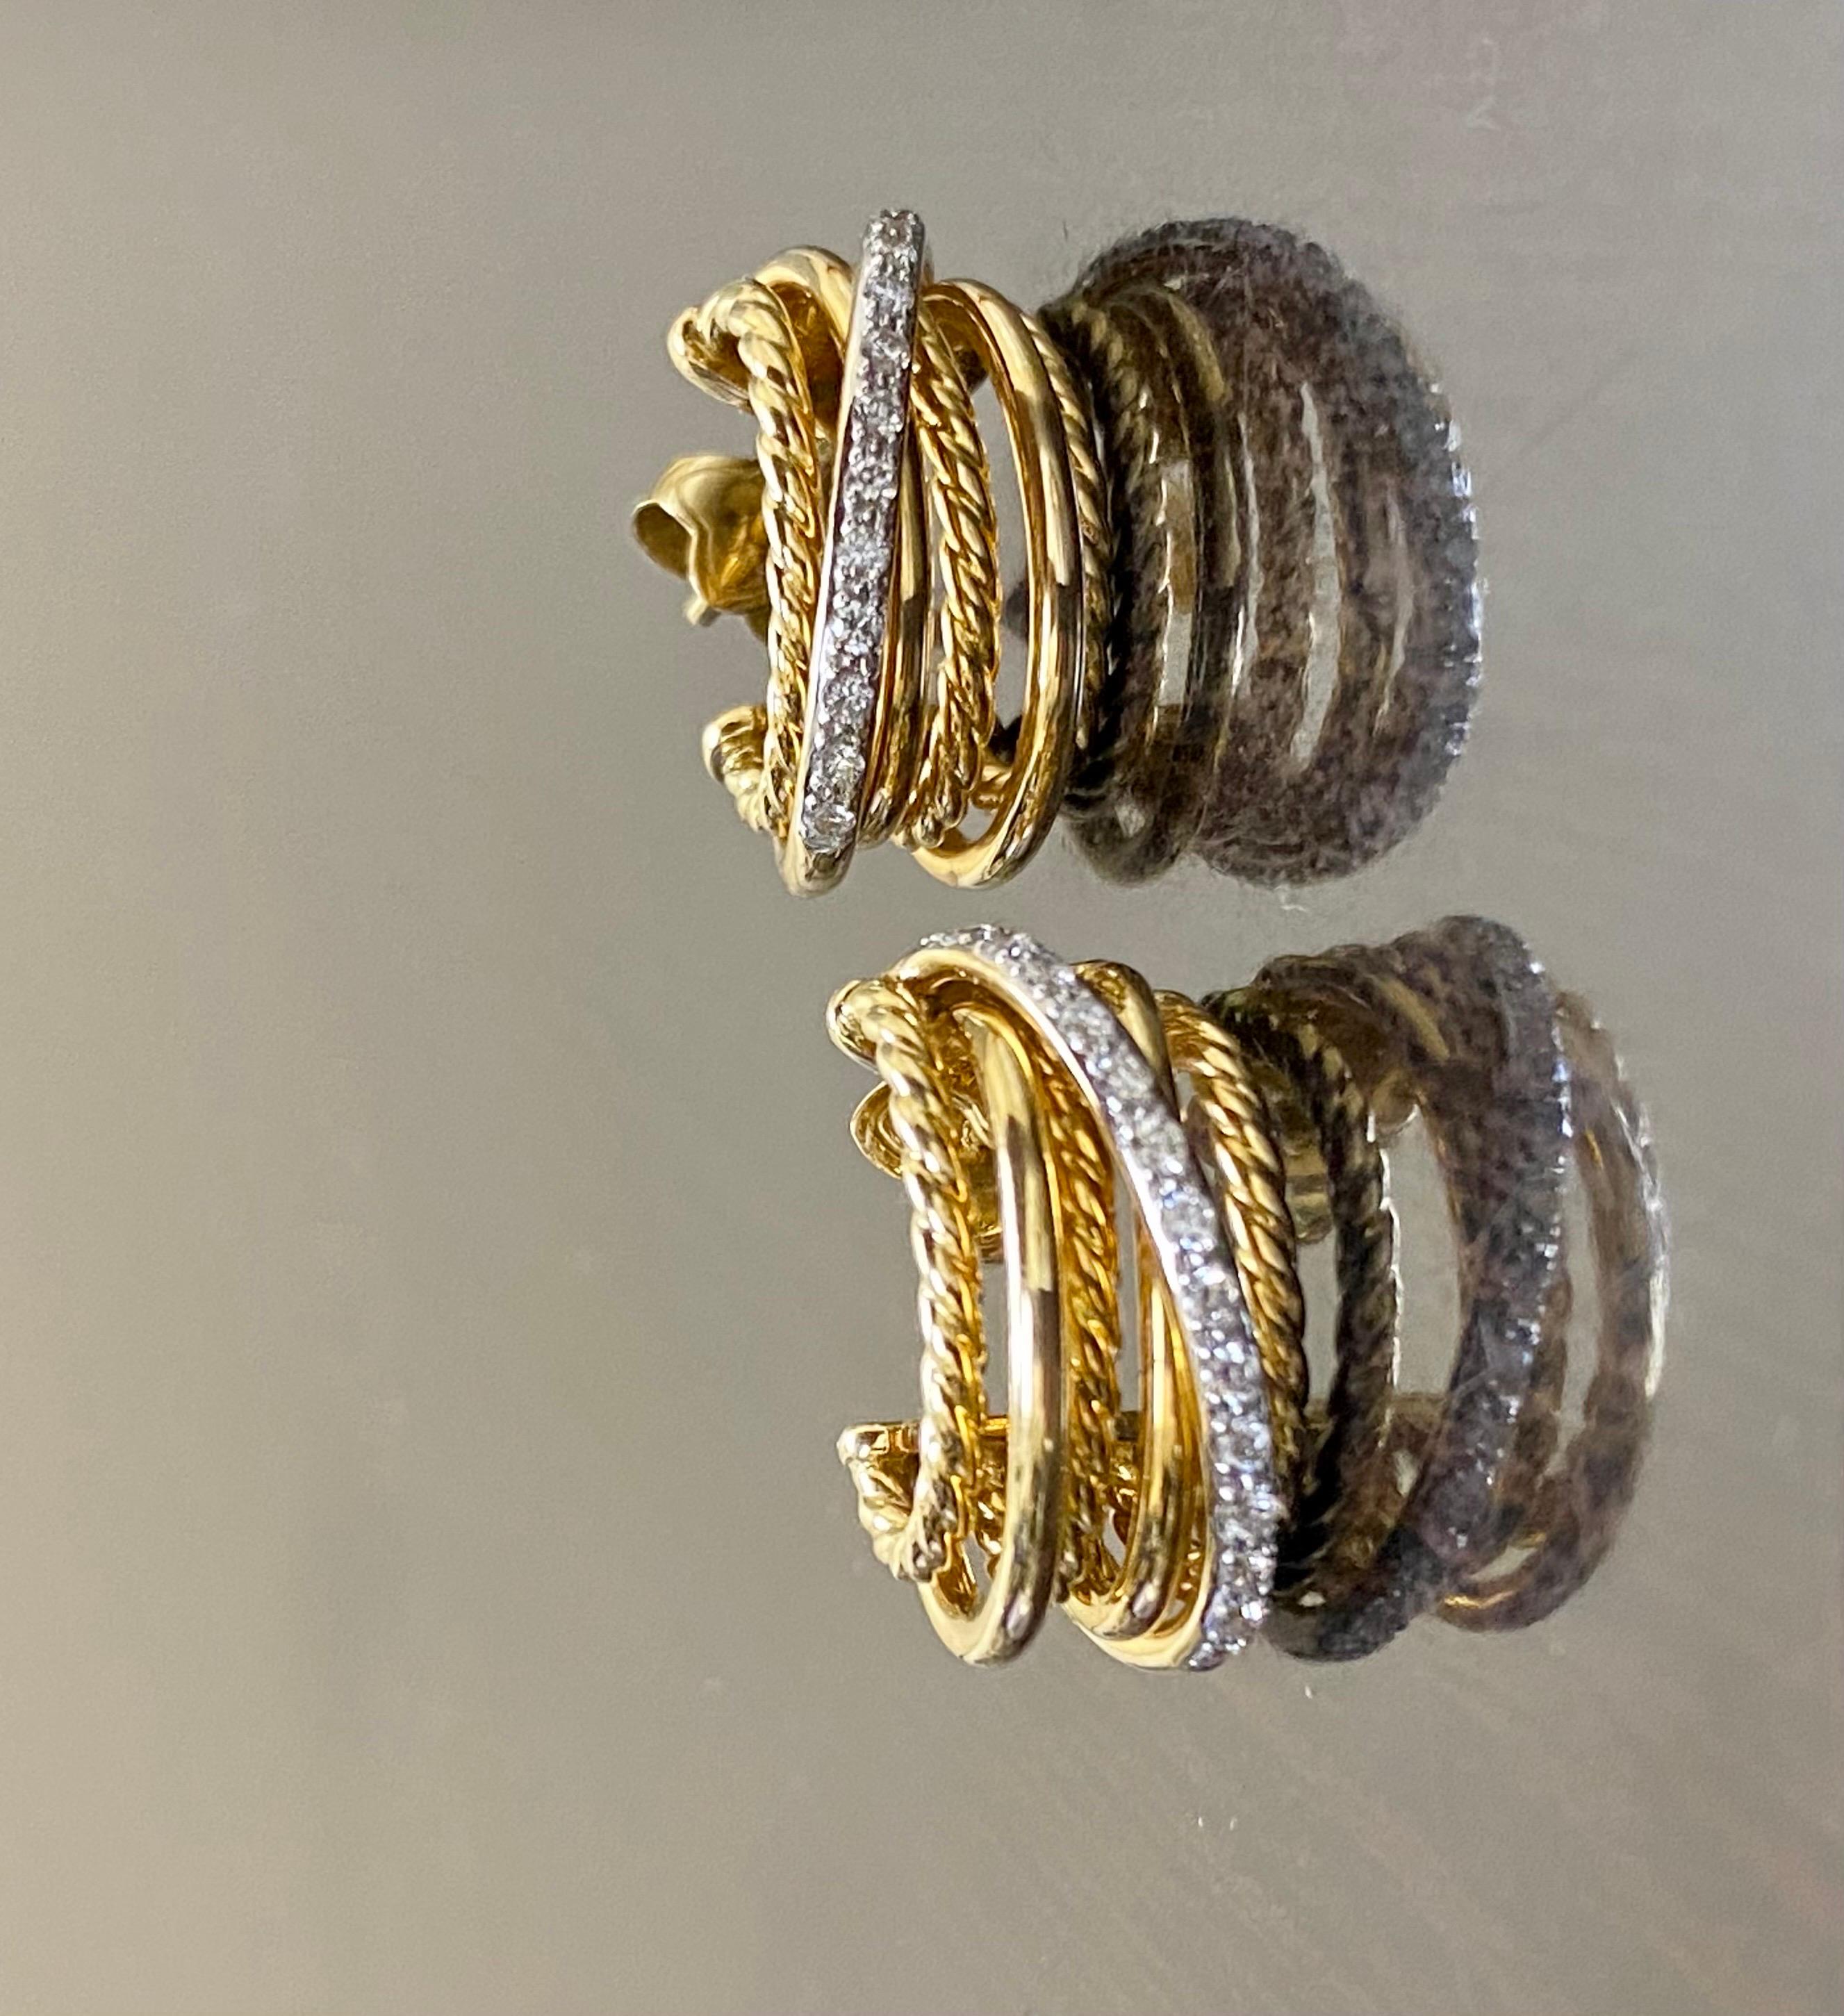 yellow gold diamond huggie hoop earrings